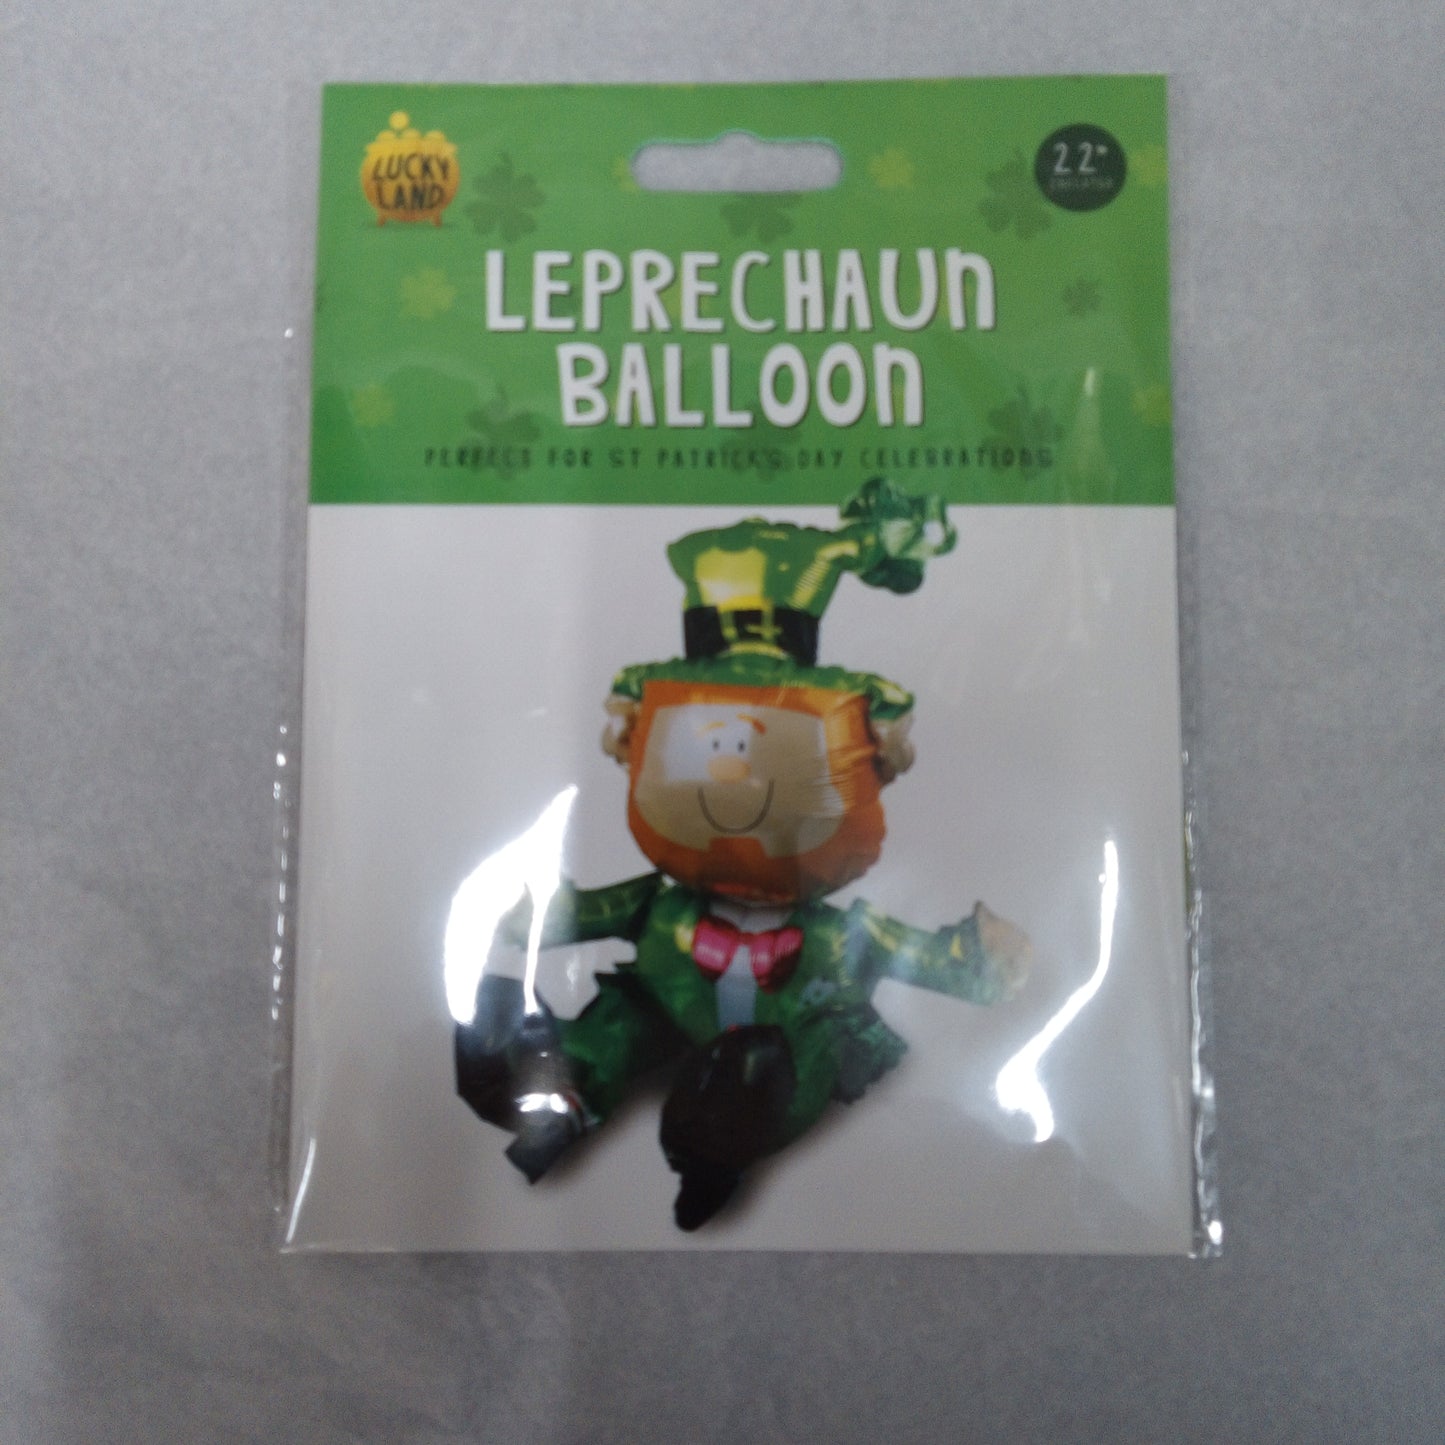 Leprechaun Balloon 22 inch